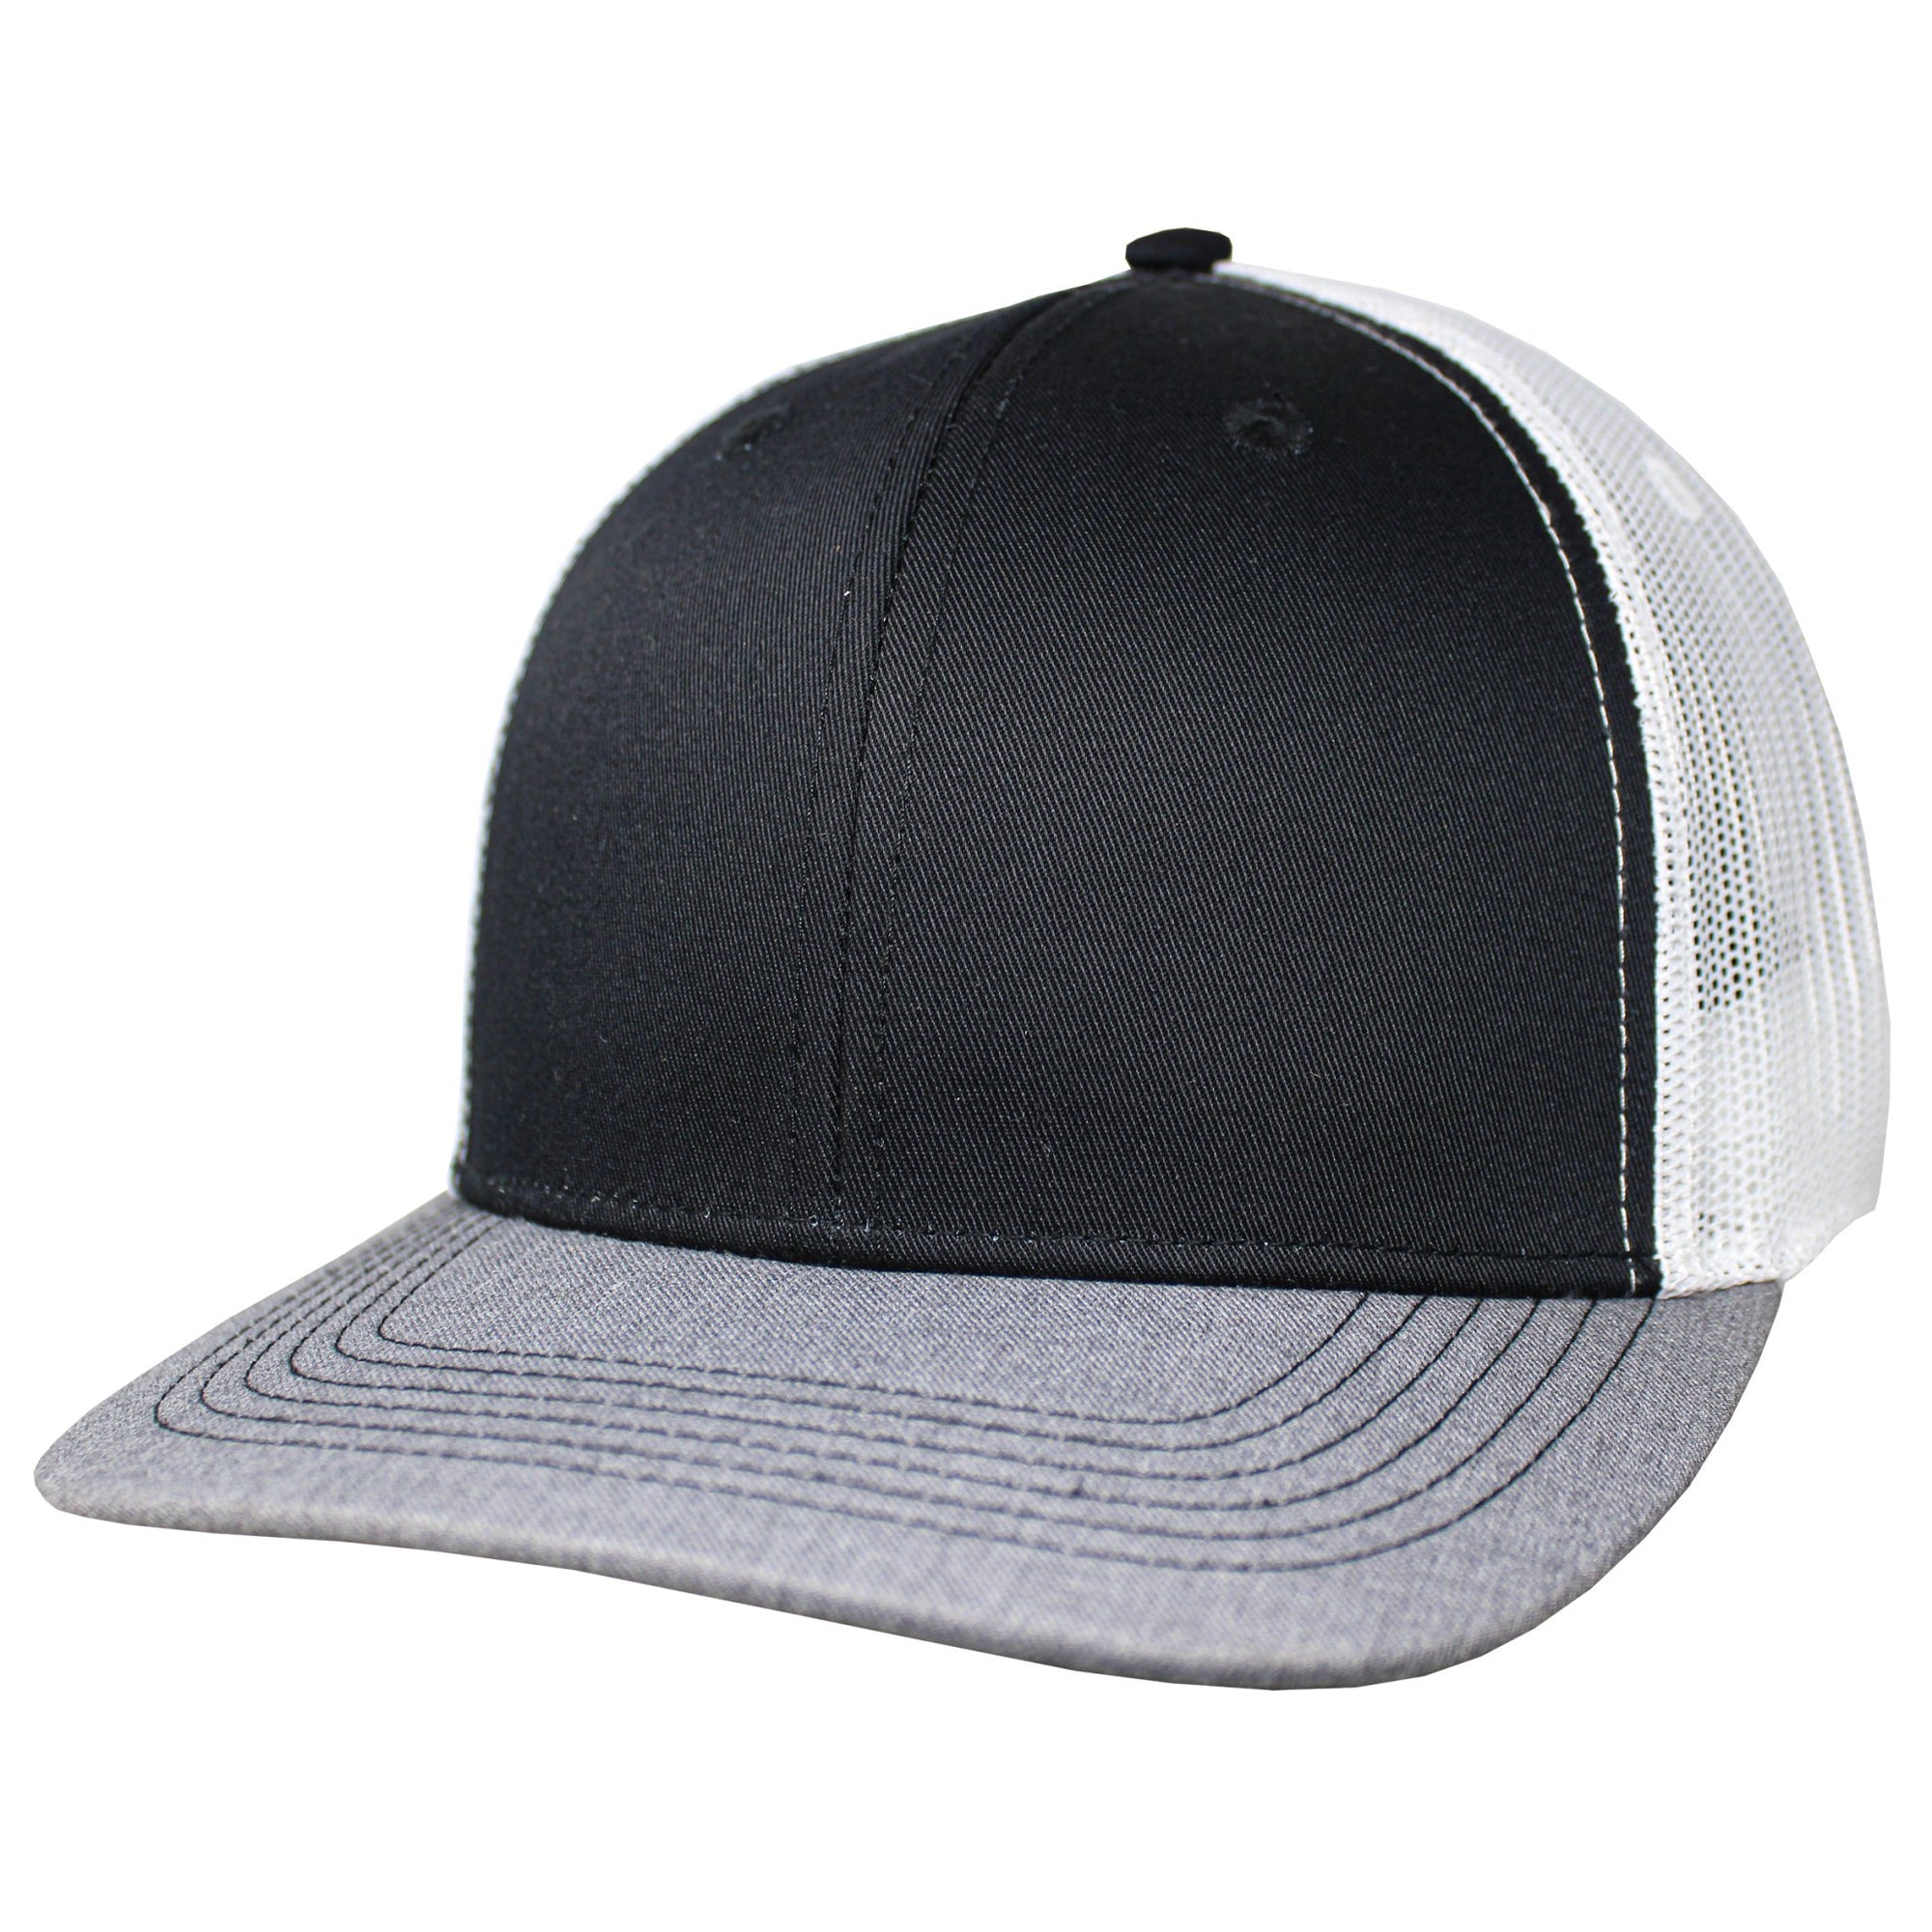 Blank Headwear - BC23 / 6 Panel Performance Trucker Cap - Black/White/Gray - Black Cat MFG - Hat